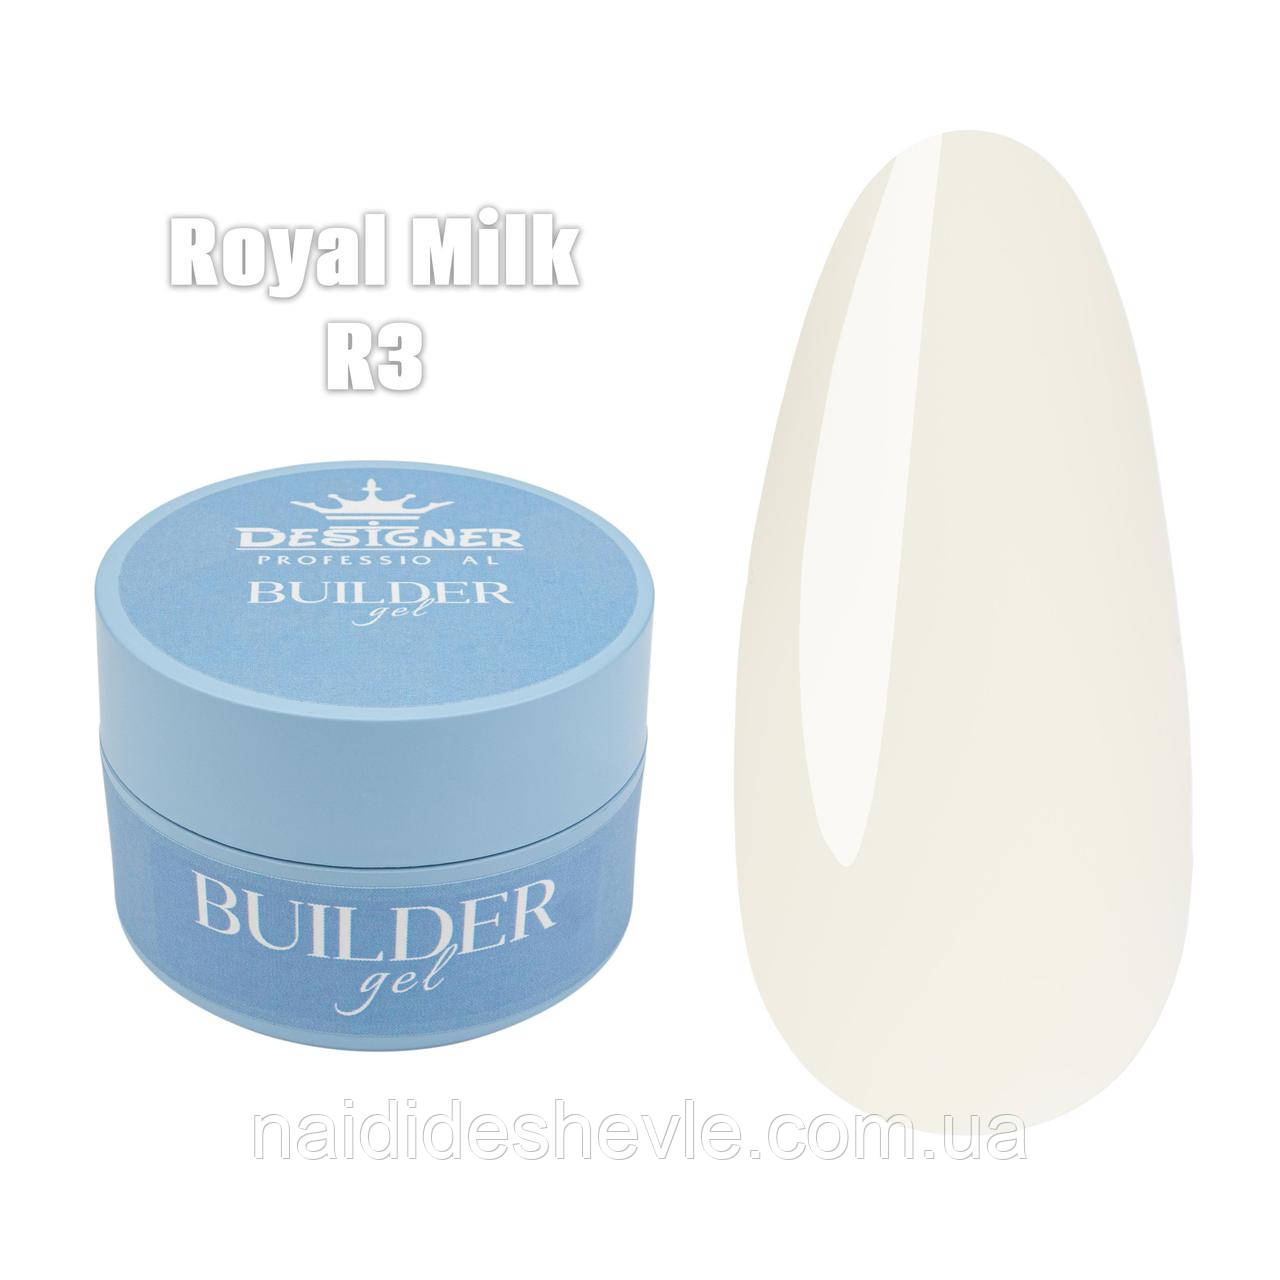 Моделюючий гель для нарощування - 30 мл, Builder Gel, Дизайнер Royal milk R3